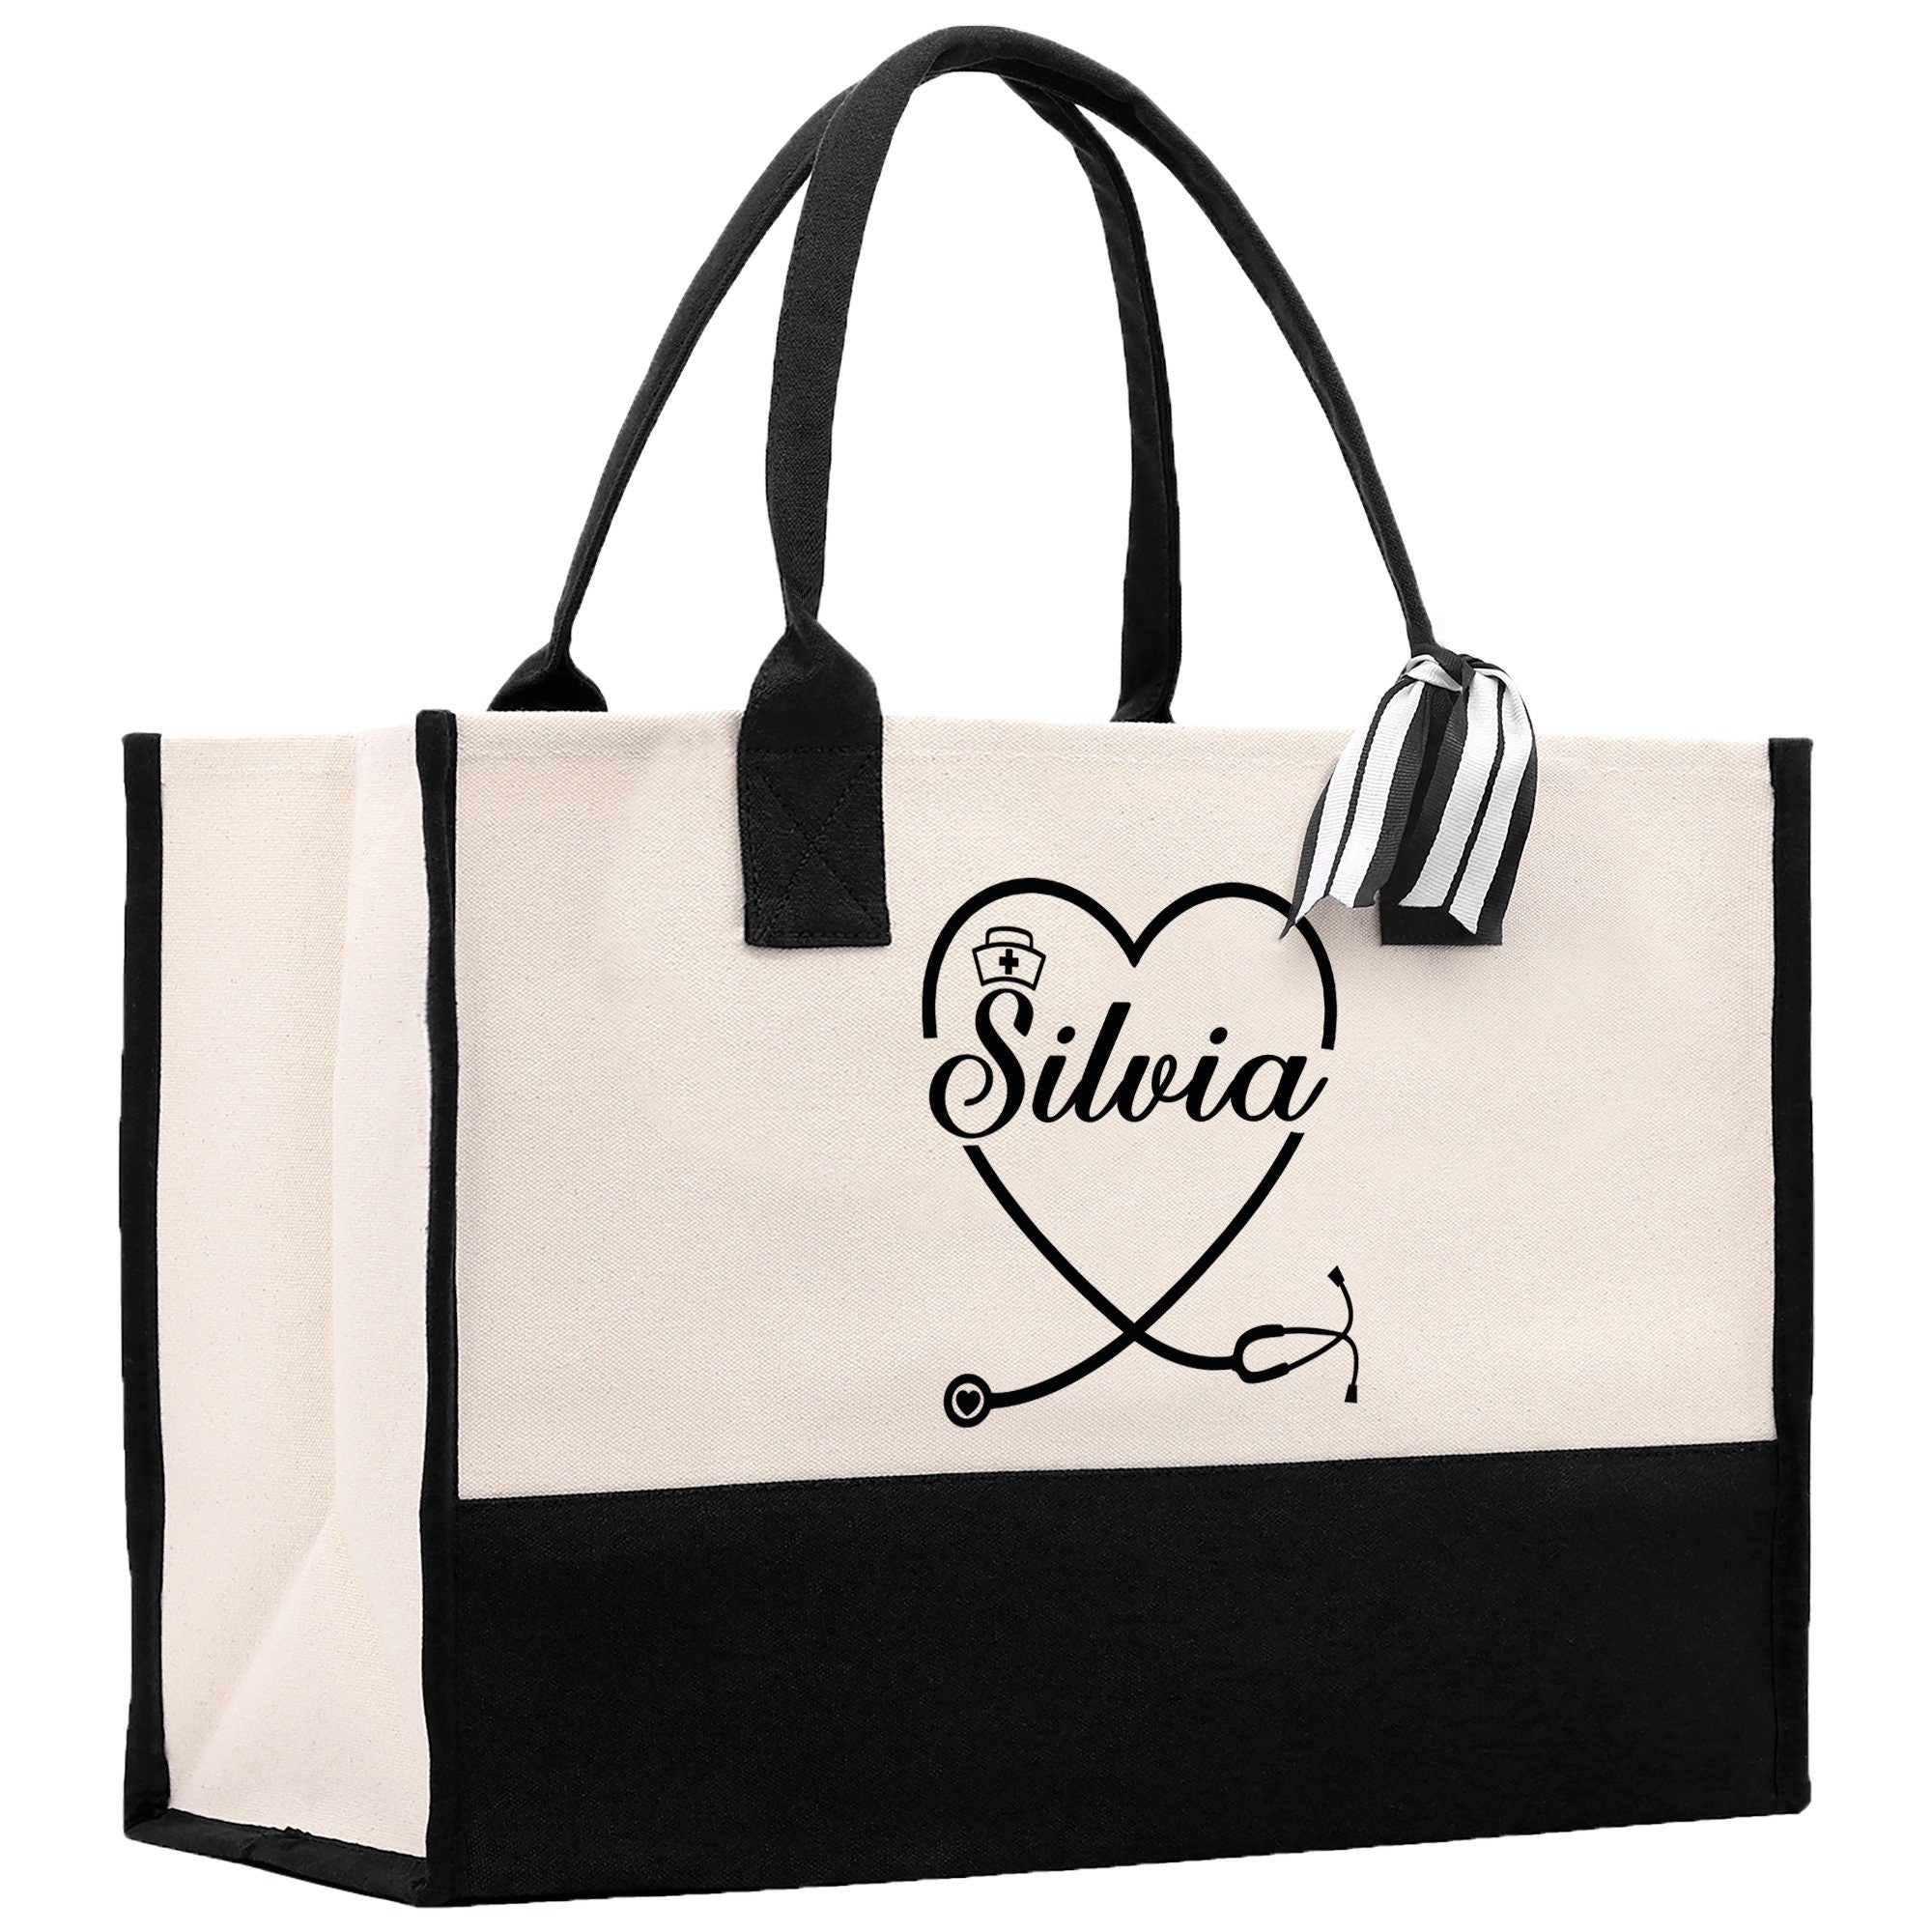 a black and white shopping bag with a stevia logo